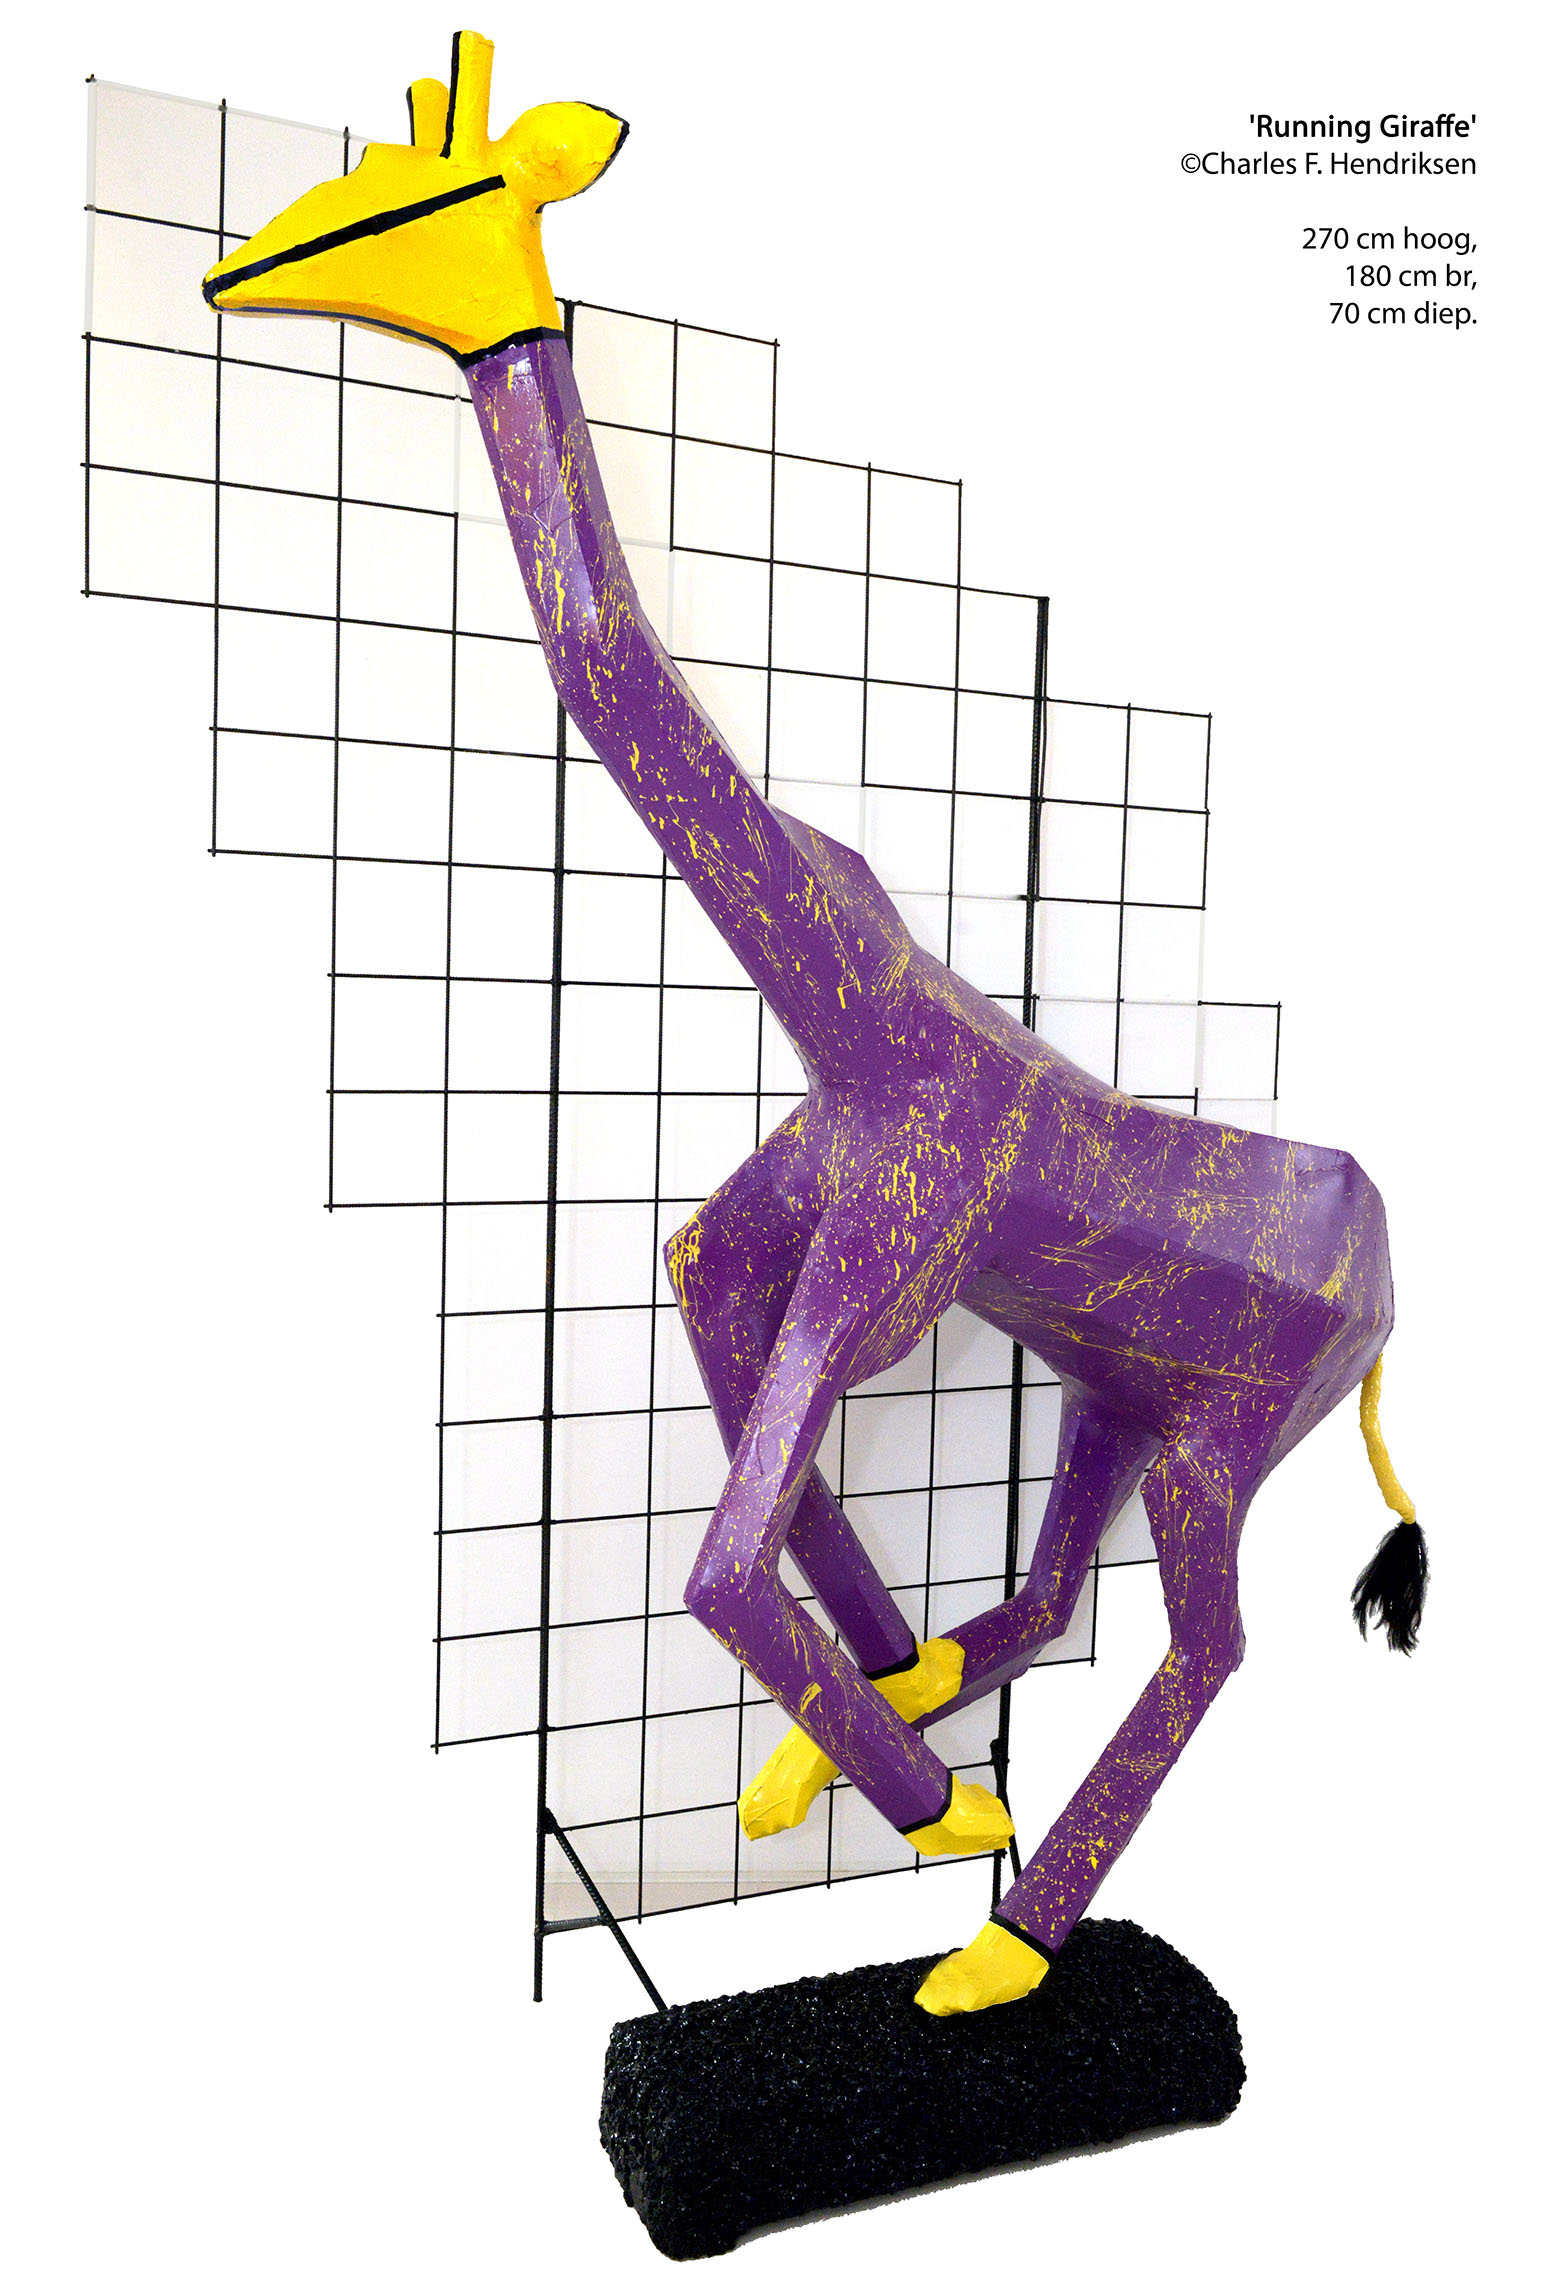 'Running Giraffe' by Charles F. Hendriksen - 2015 270 cm hoog, 180 cm br, 70 cm diep.